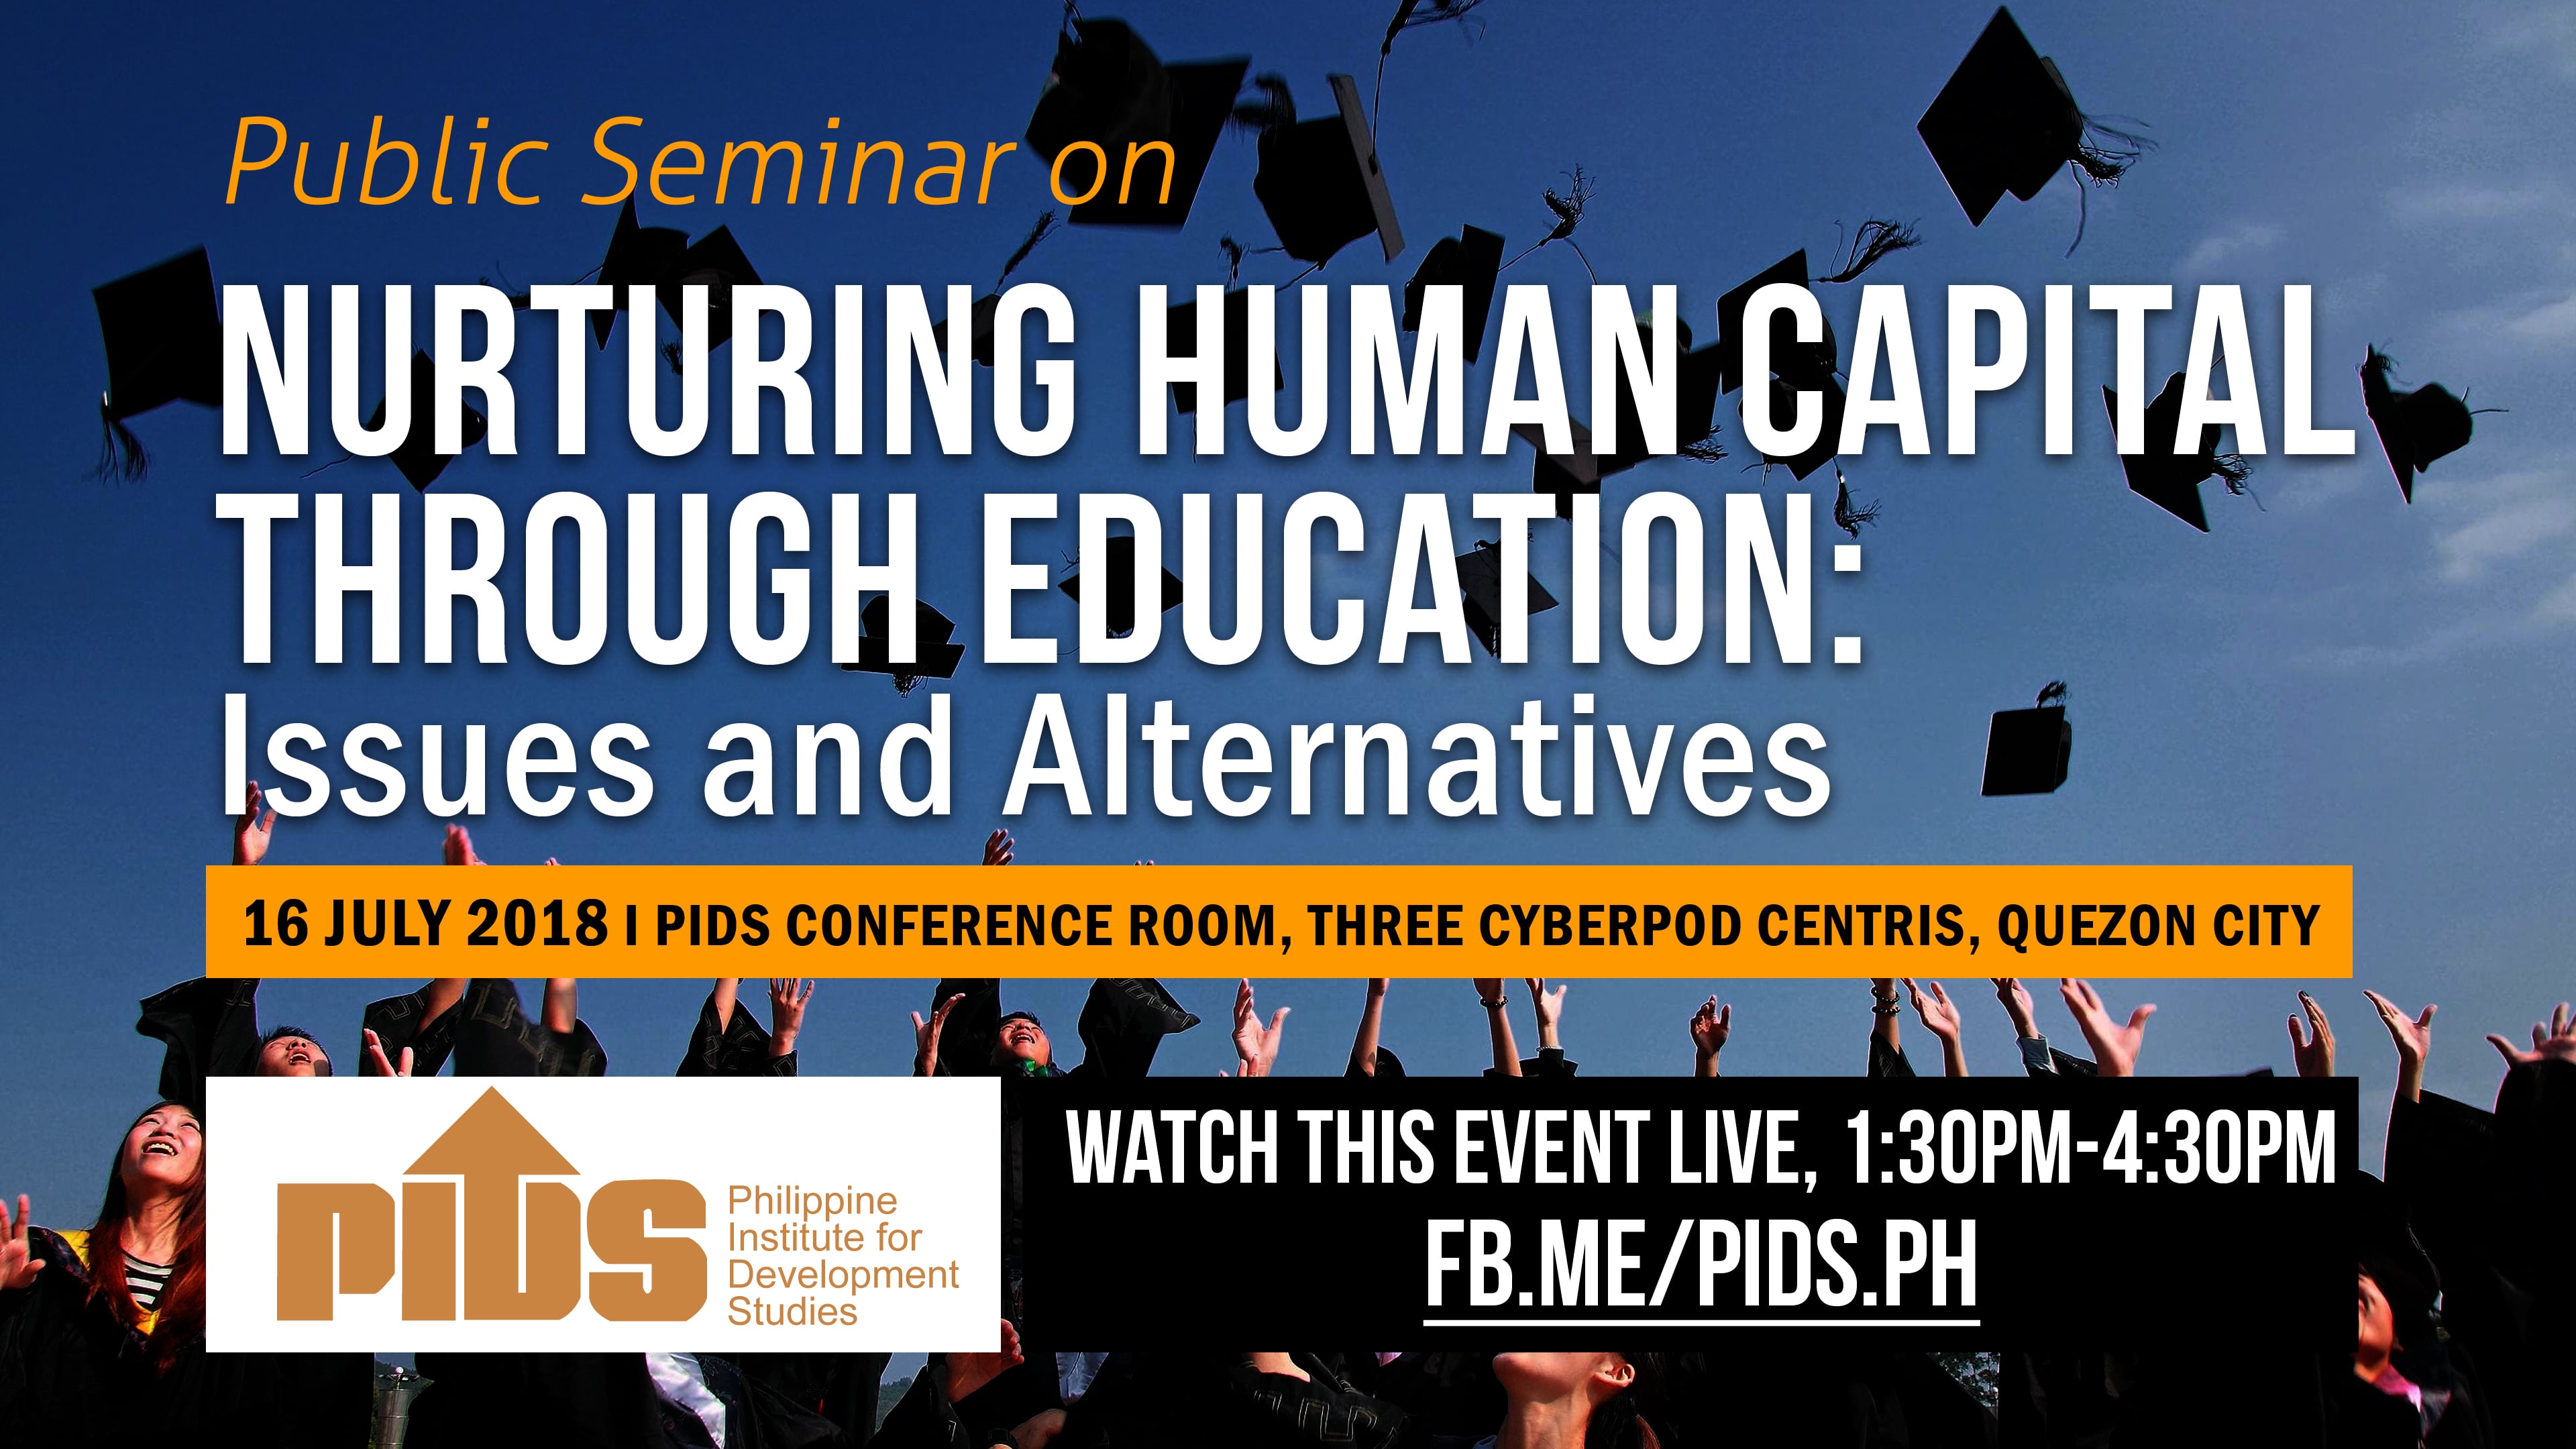 Nurturing Human Capital through Education: Issues and Alternatives-pids-als-0-20180716.jpg